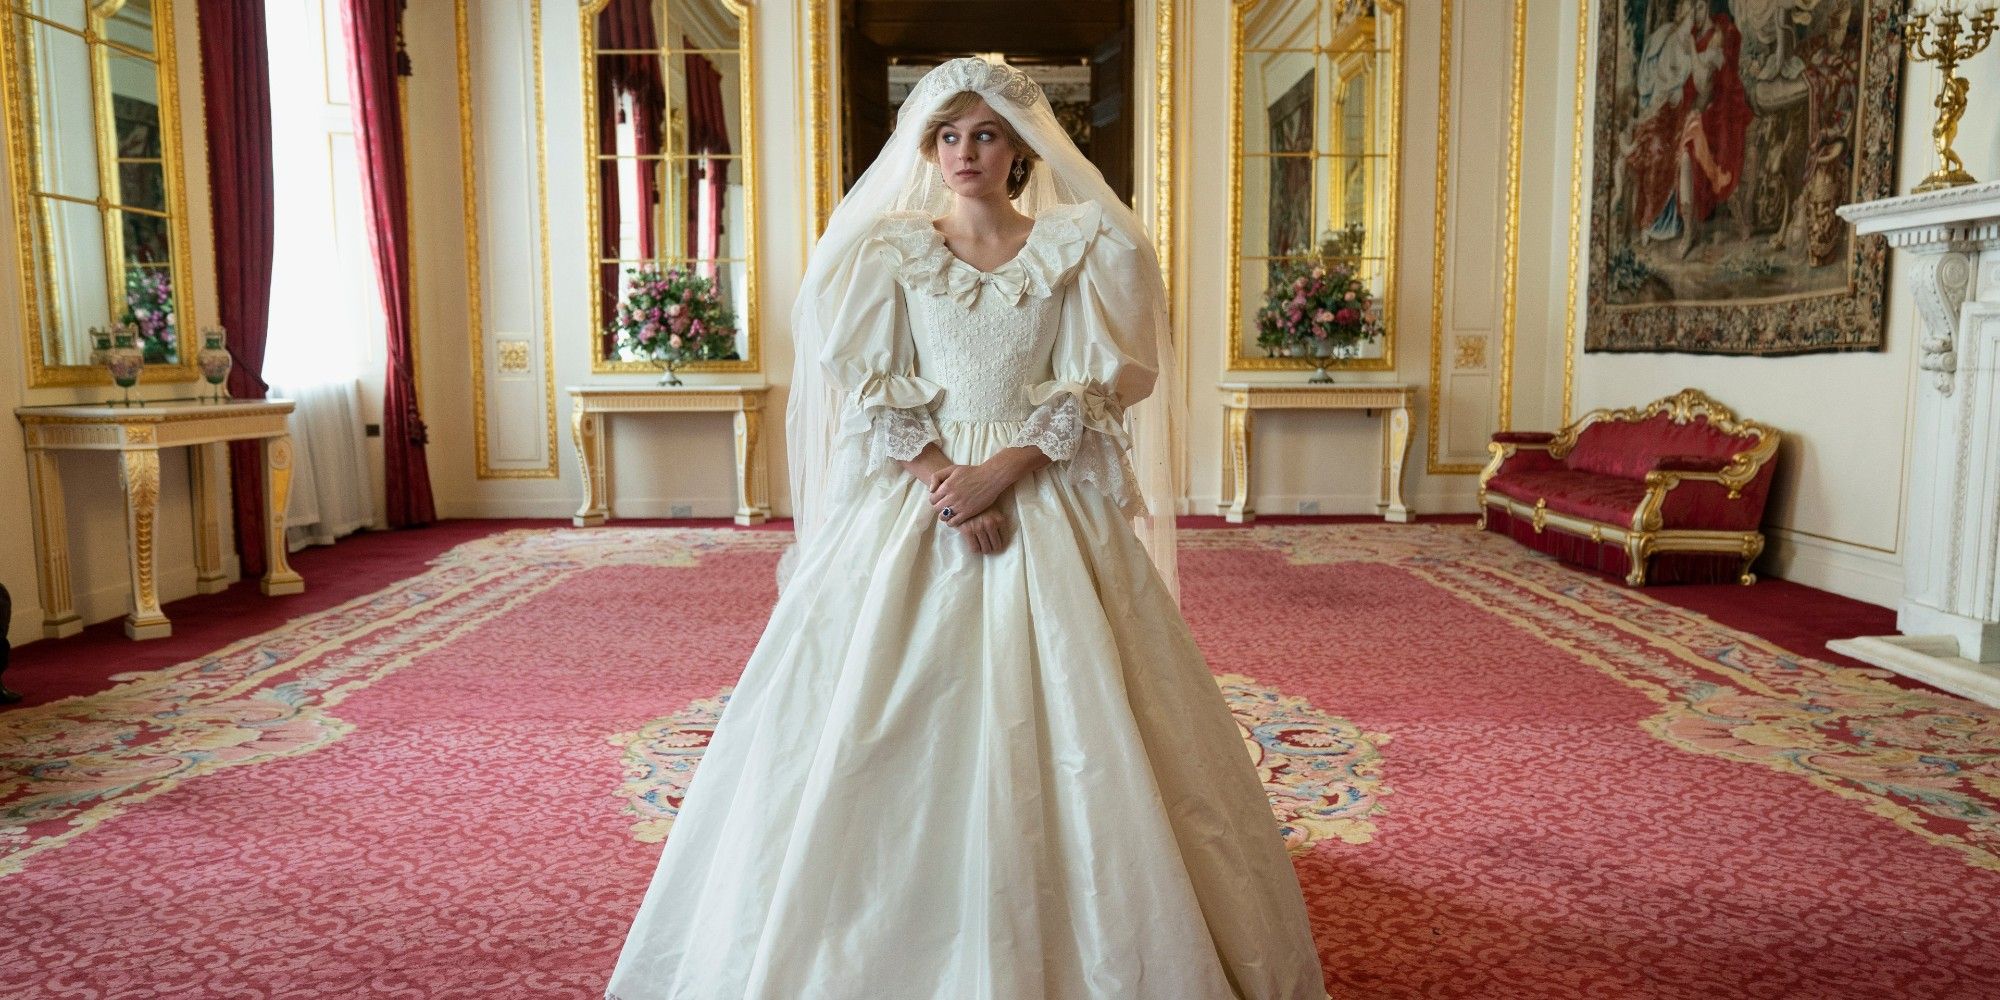 Emma Corrin in Princess Diana's wedding dress from The Crown season 4